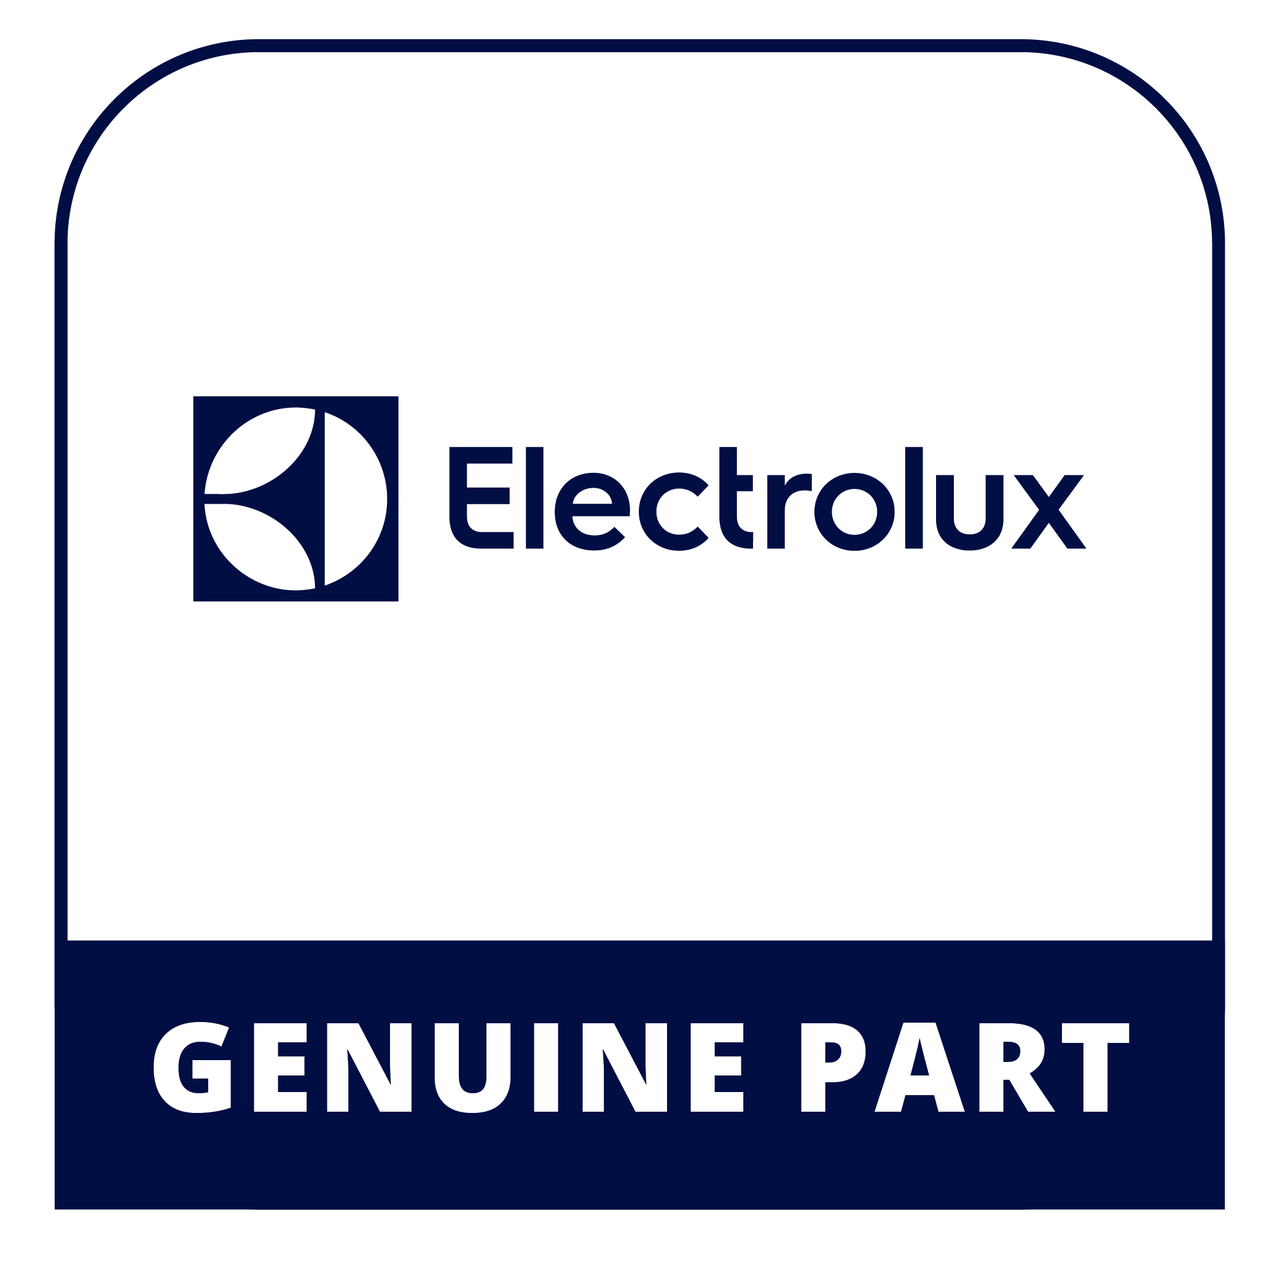 Frigidaire - Electrolux 316419376 Overlay - Genuine Electrolux Part